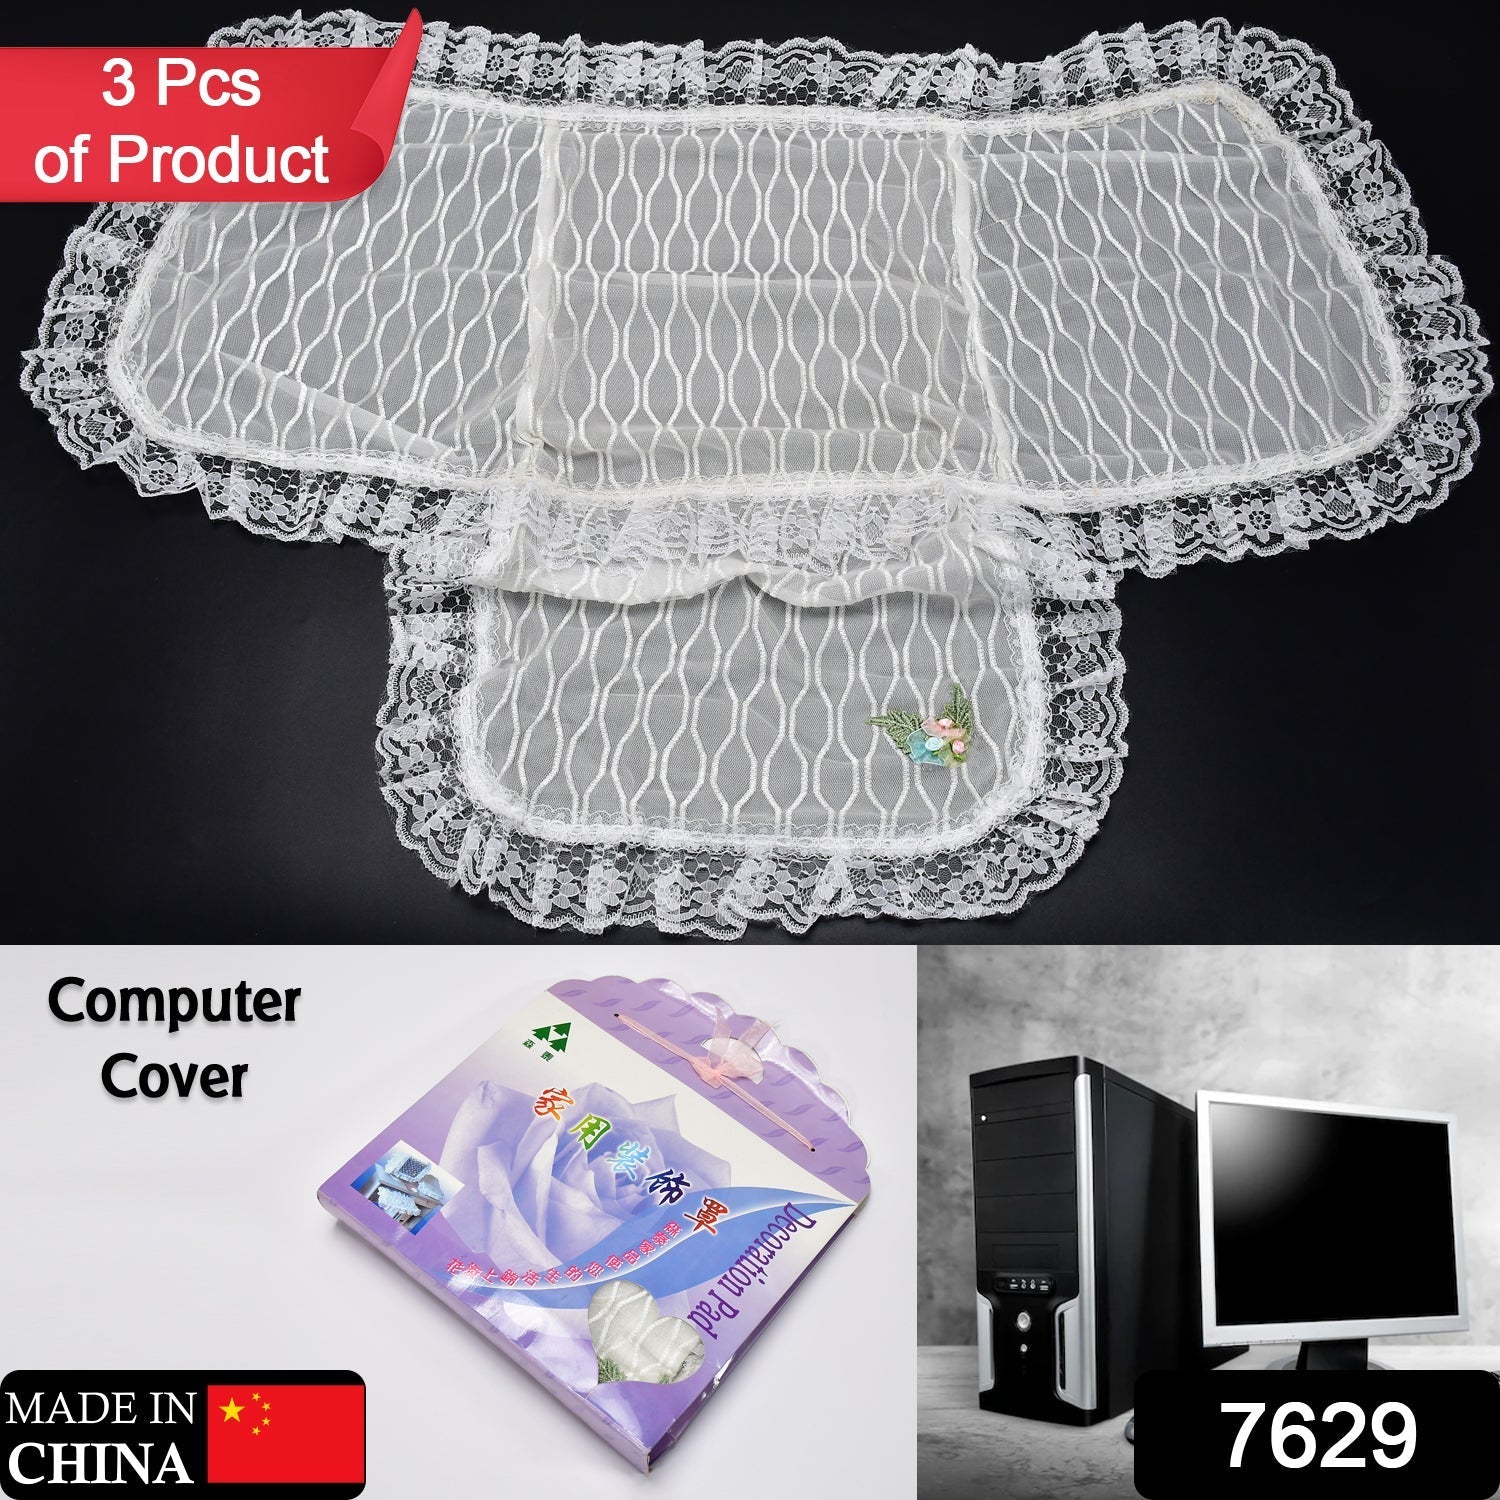 7629 Computer Cover Dust Proof Combo for Desktop PC ( 3 PCS Of Product ) DoeDap